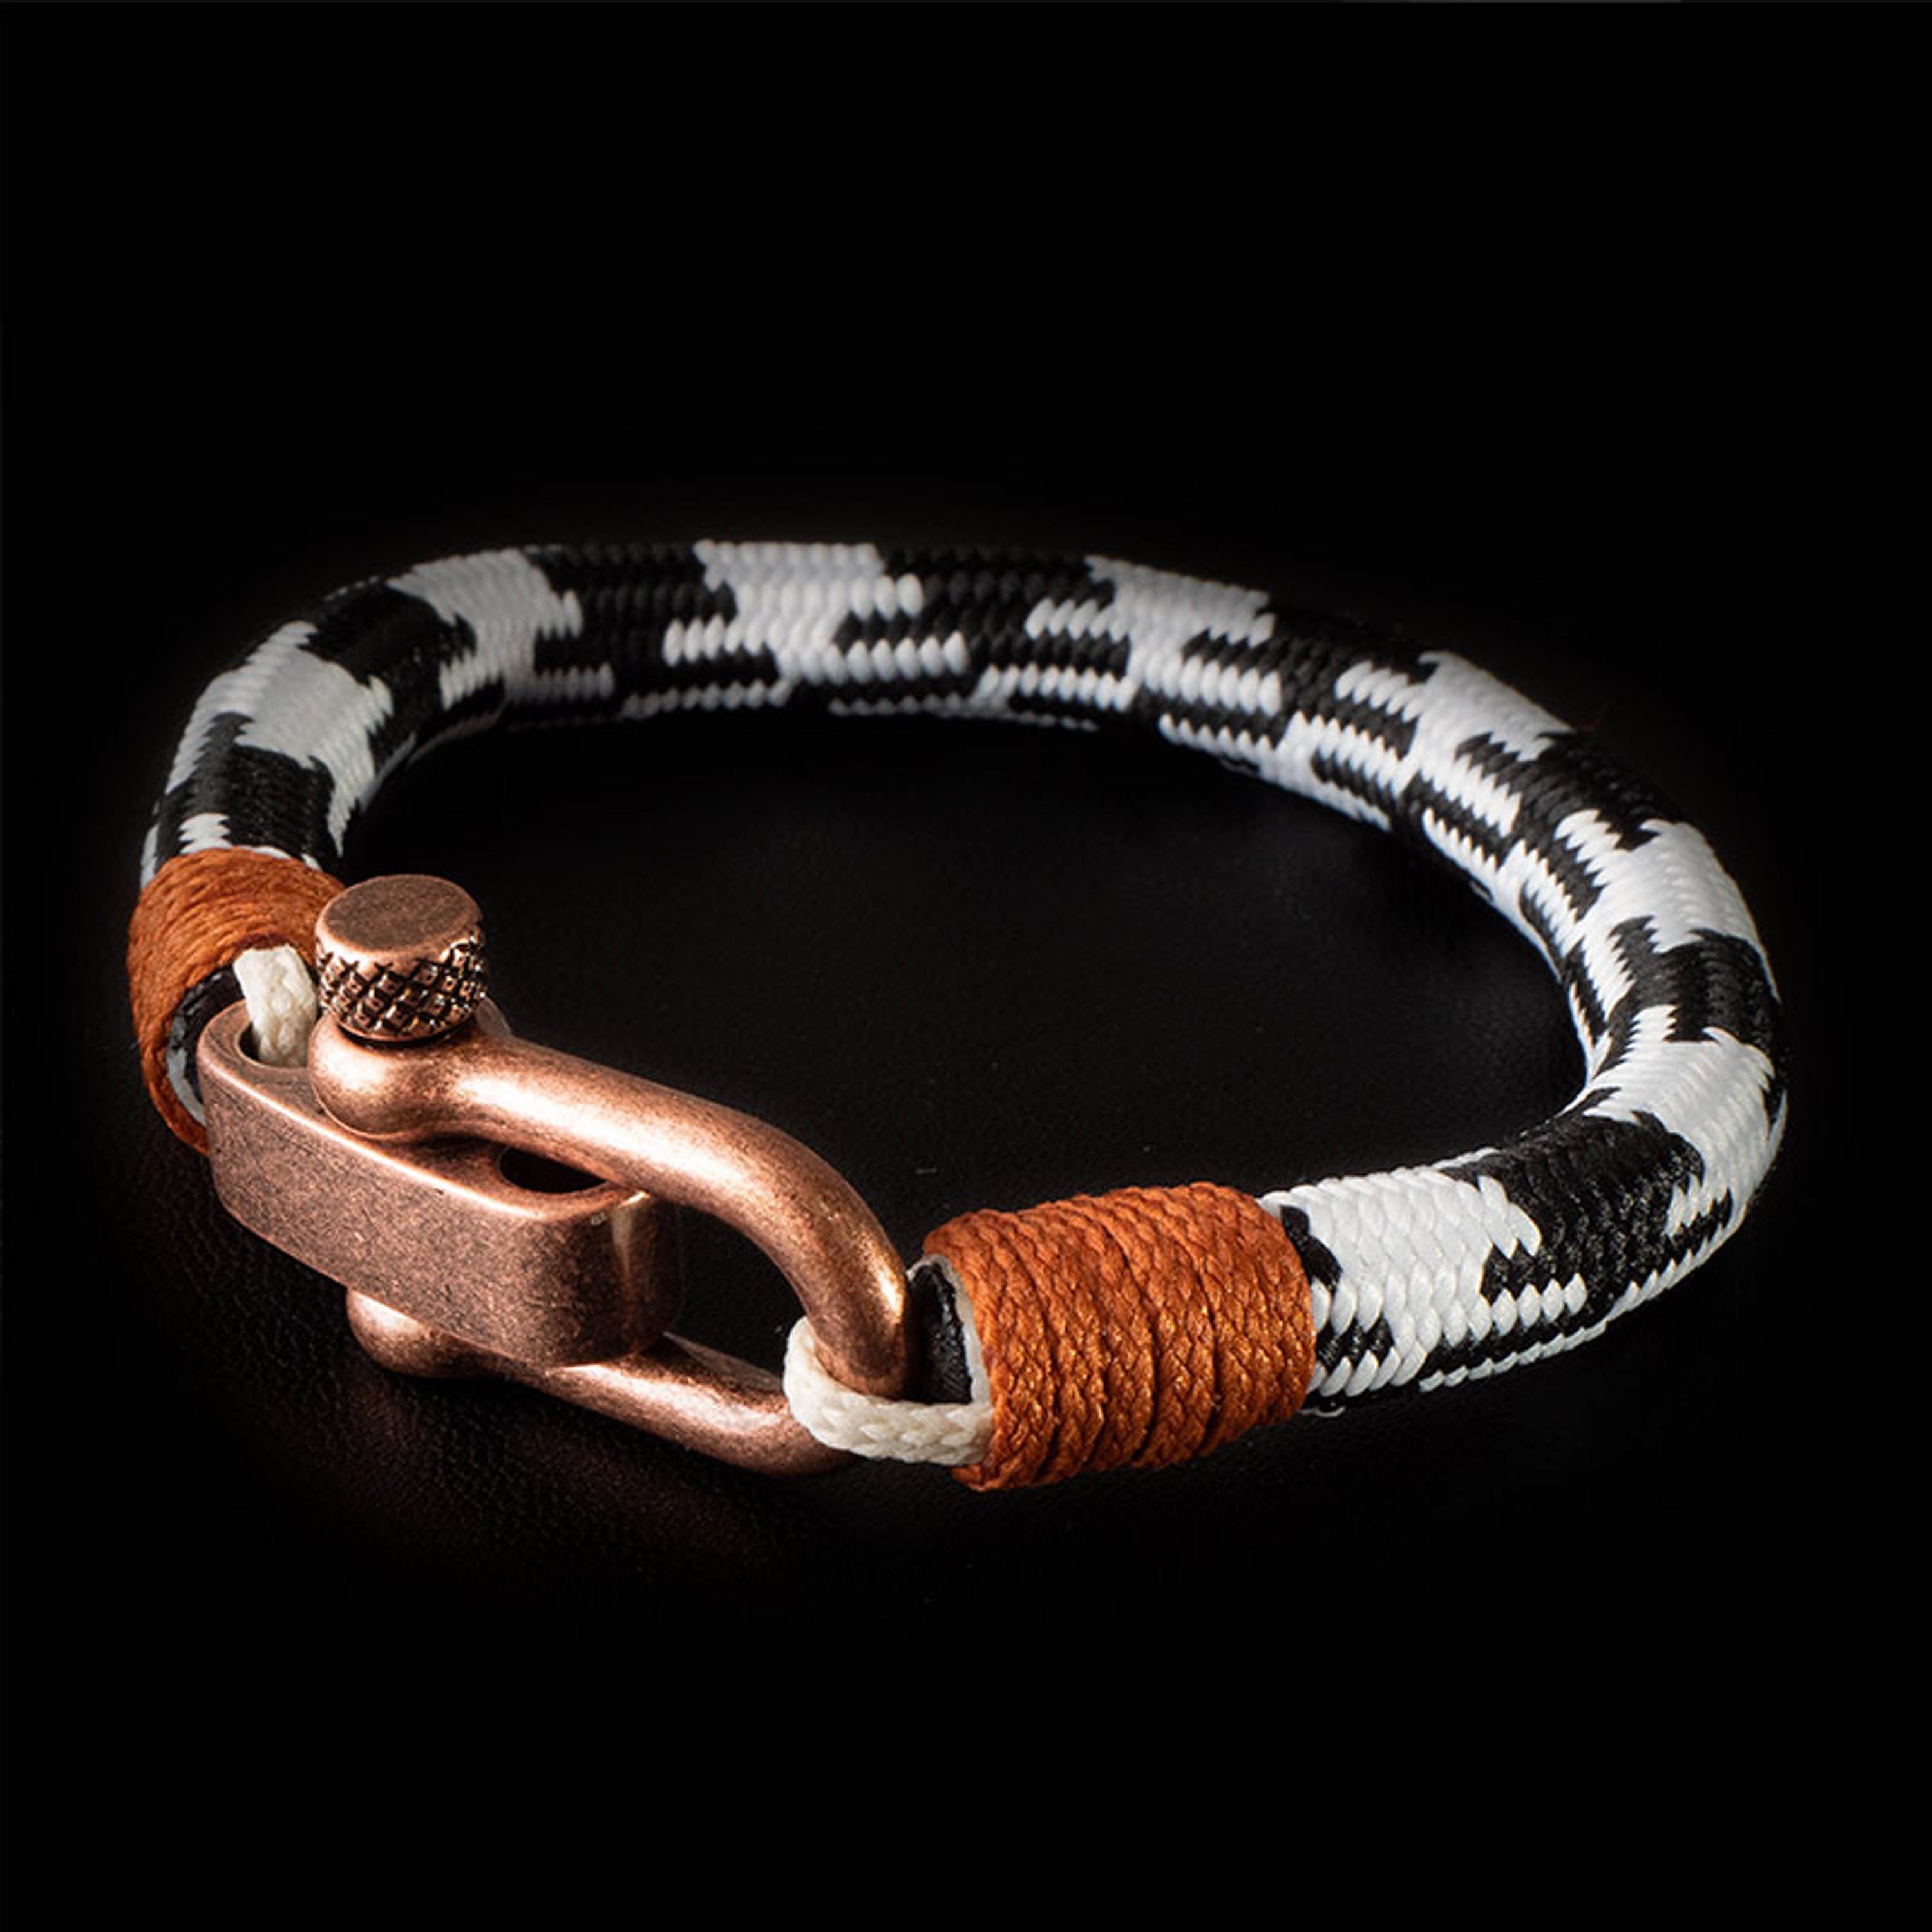 Casual Style, (Edelstahl, UNIQAL.de maritime, nautics, Maila Armband Armband Segeltau, handgefertigt) aus "OCEAN" Segeltau Maritime Schäckel